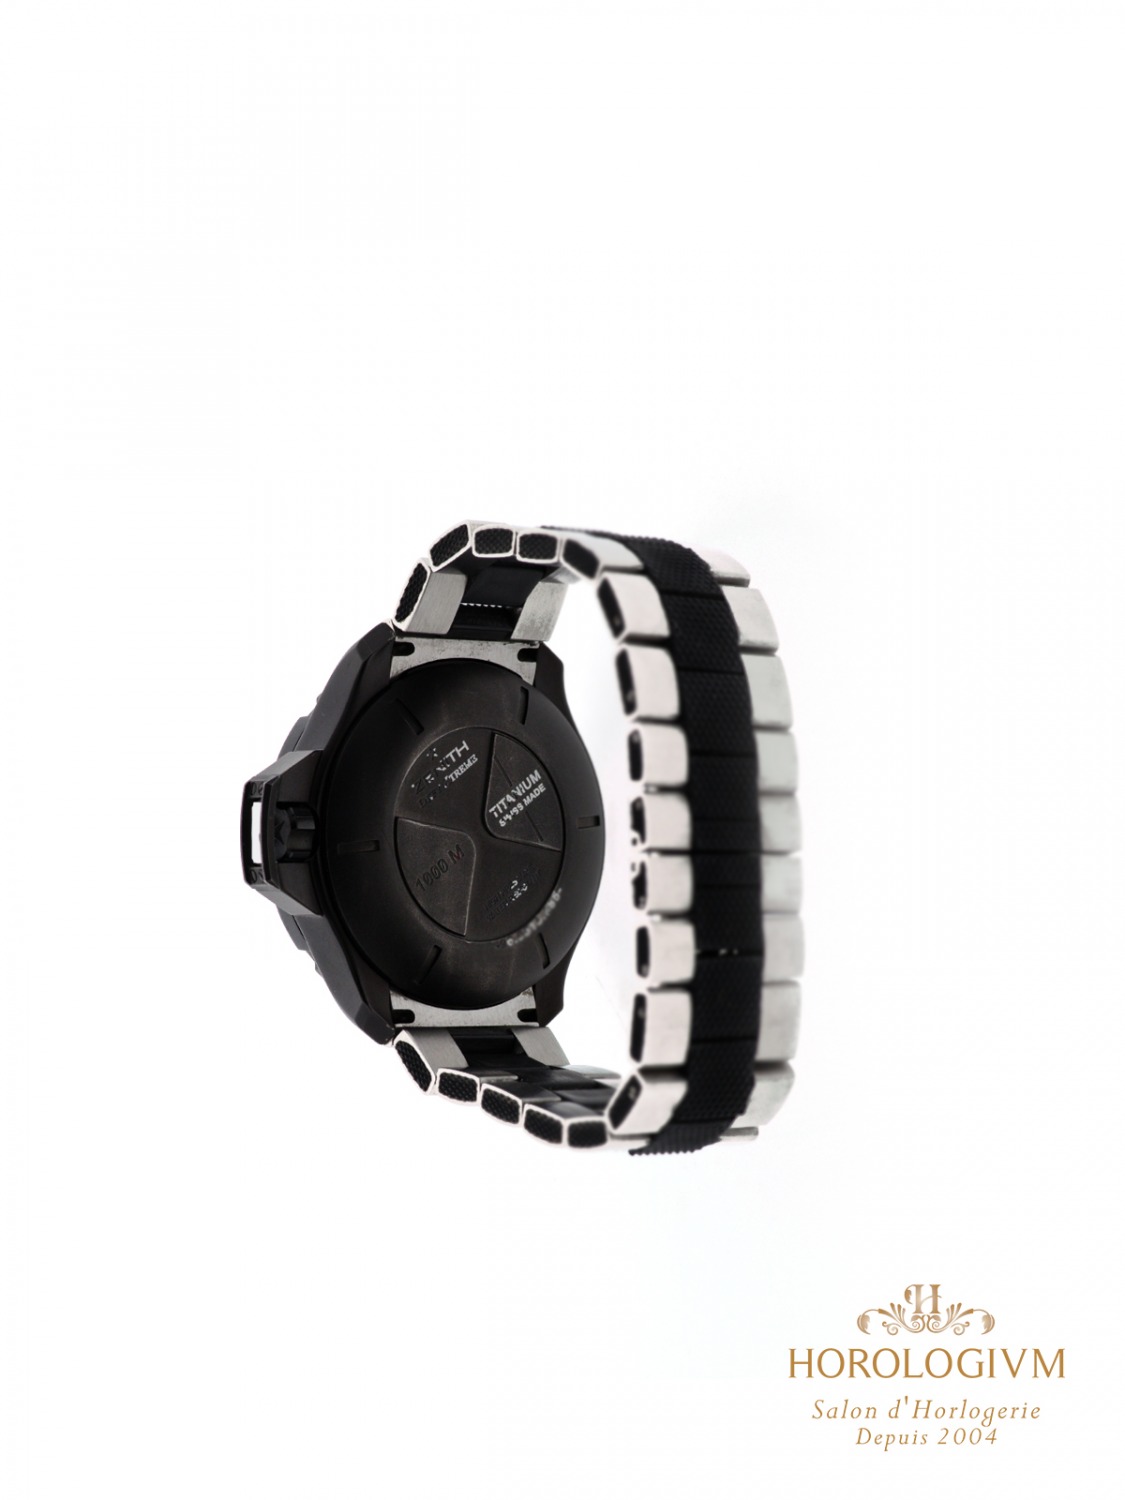 Zenith Defy-Extreme Elite Ref. 96.0515.685 watch, black PVD (Physical Vapor Deposition)